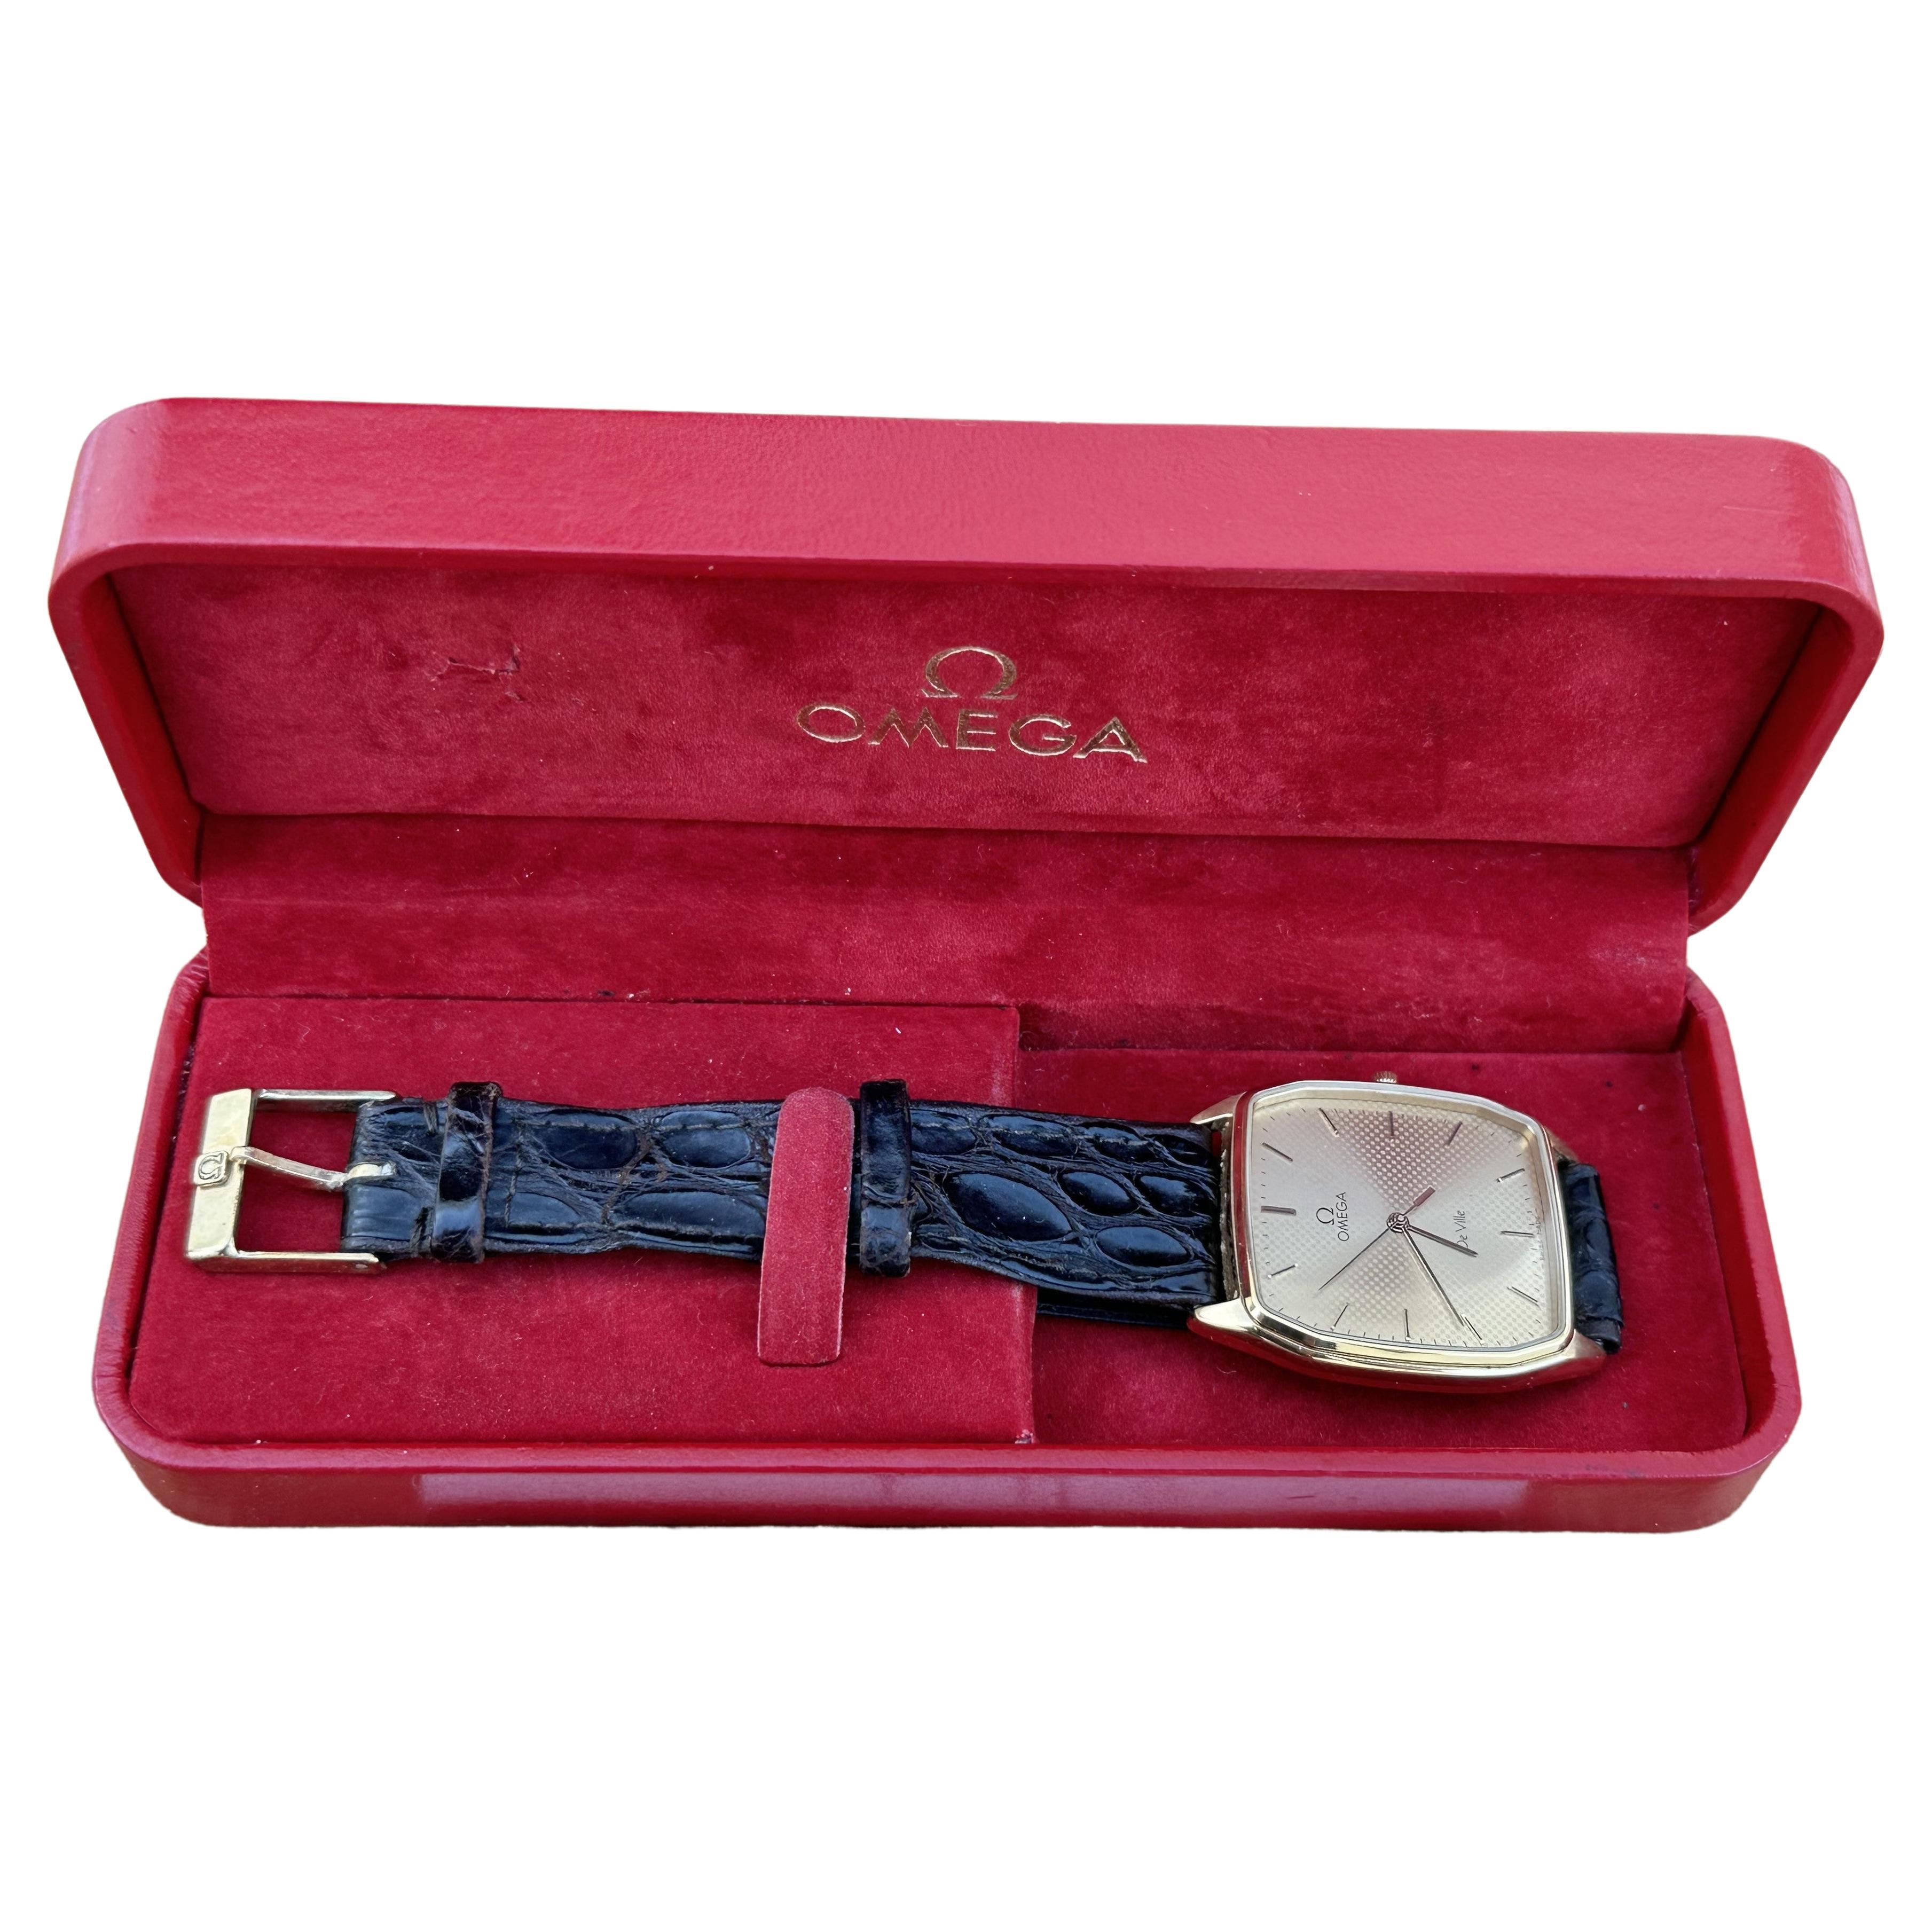 Omega De Ville 1417 Vintage Superb Gold Plated Rare Dotted Dial Watch For Sale